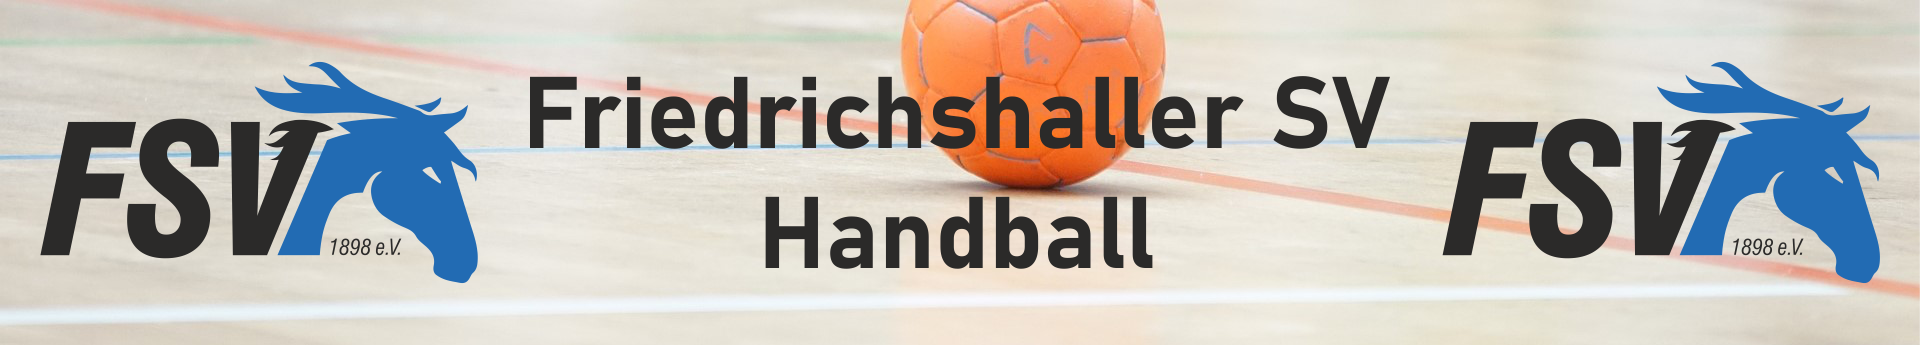 Friedrichshaller SV Handball Title Image